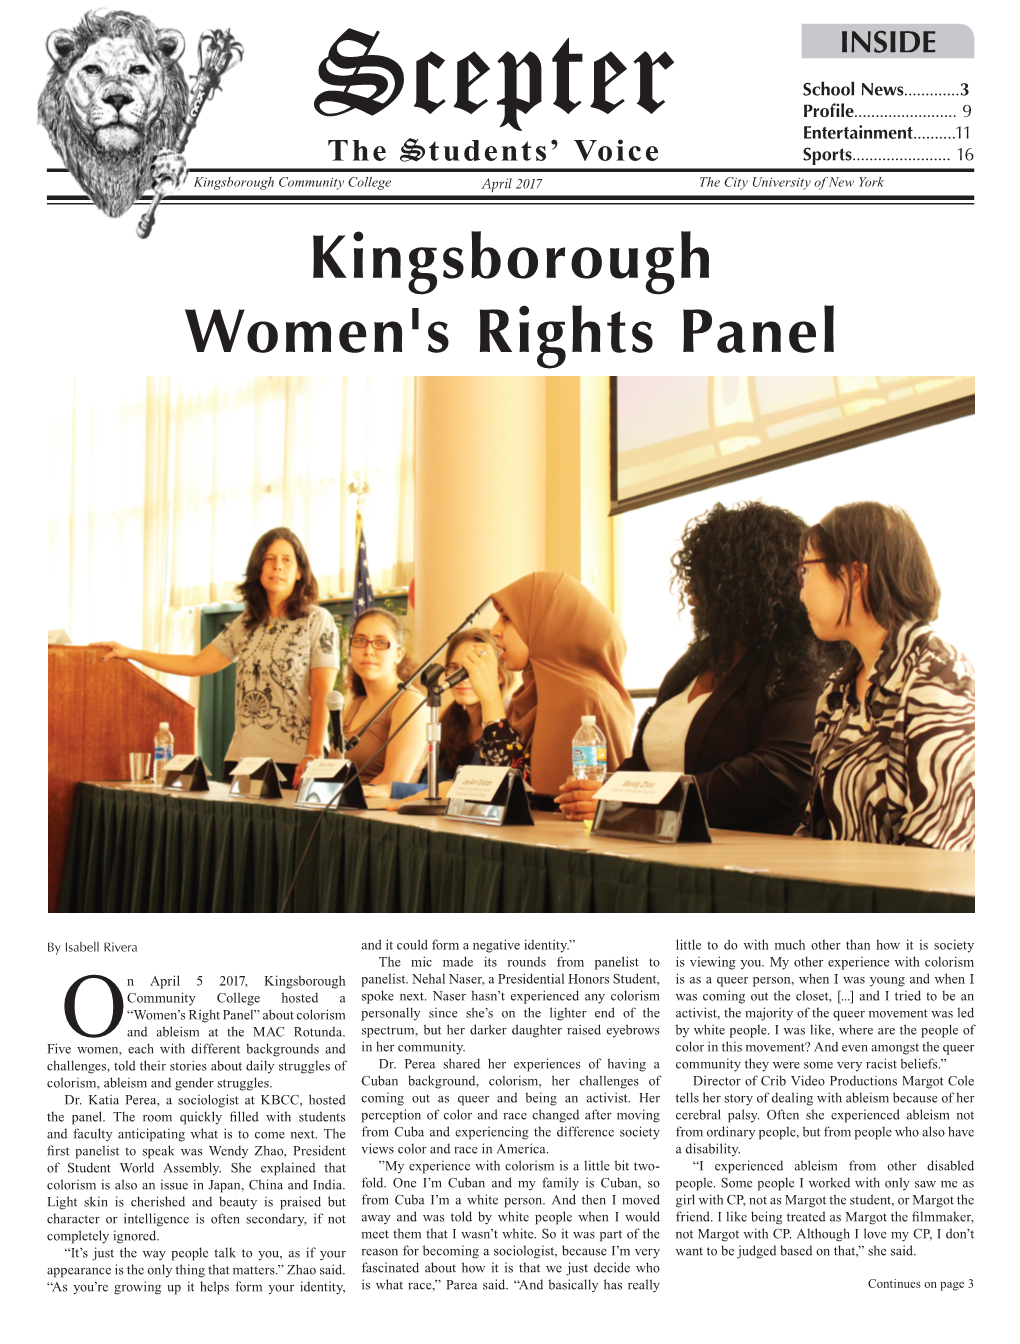 Kingsborough Women's Rights Panel